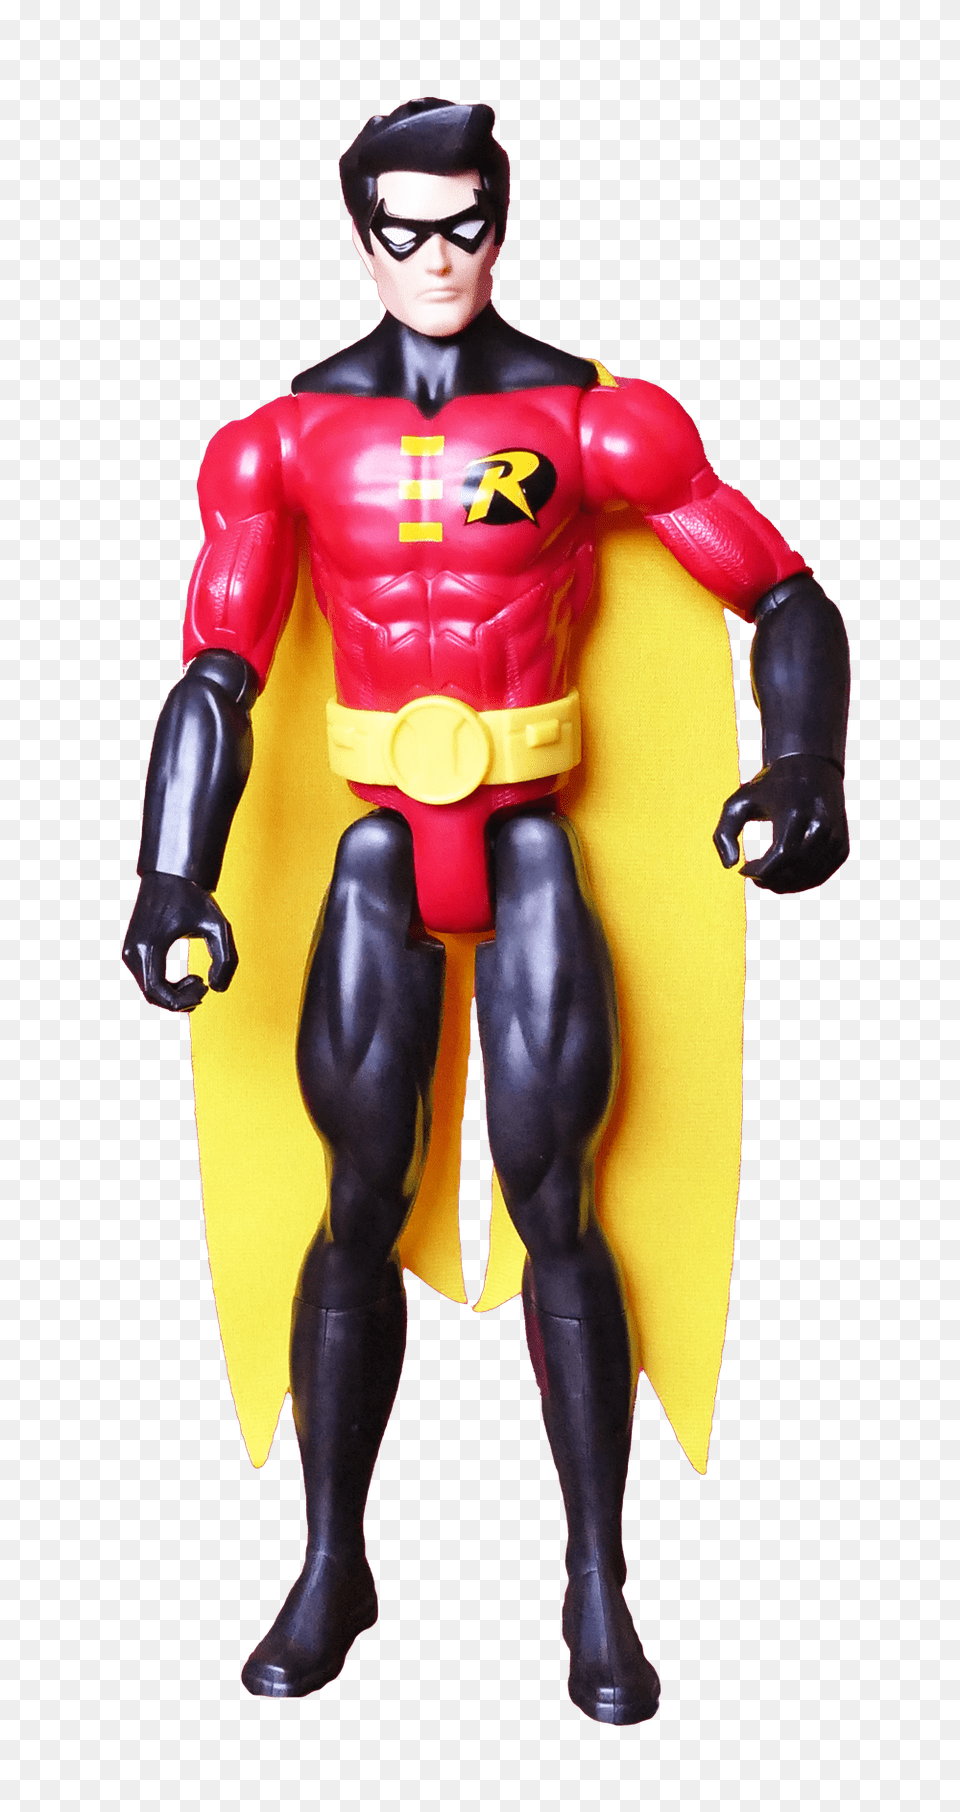 Pngpix Com Robin Superhero Image, Adult, Male, Man, Person Free Png Download